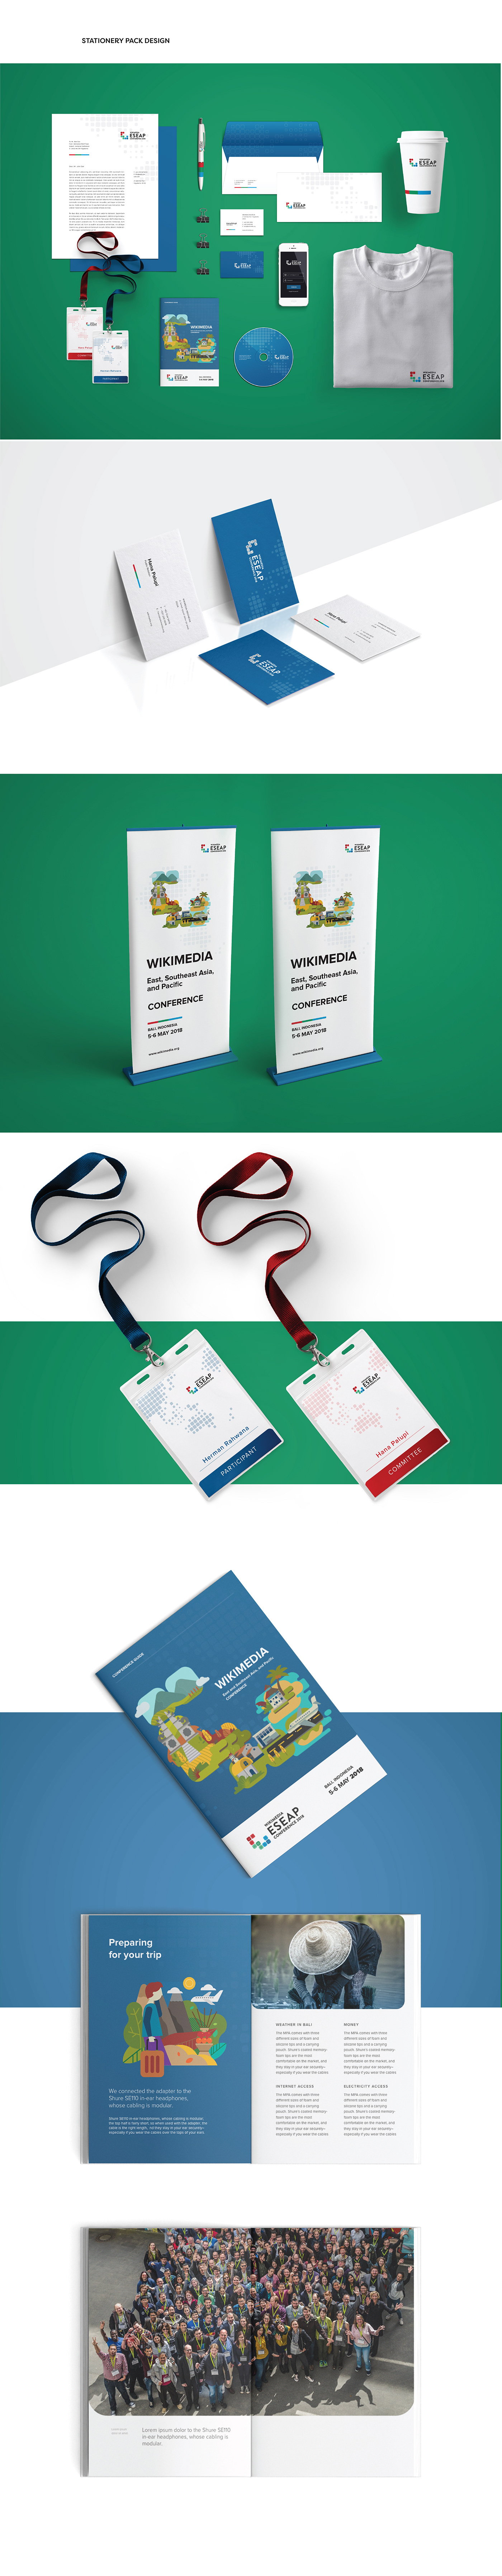 brand design logo conference branding  bali wikimedia Wikipedia brand identity